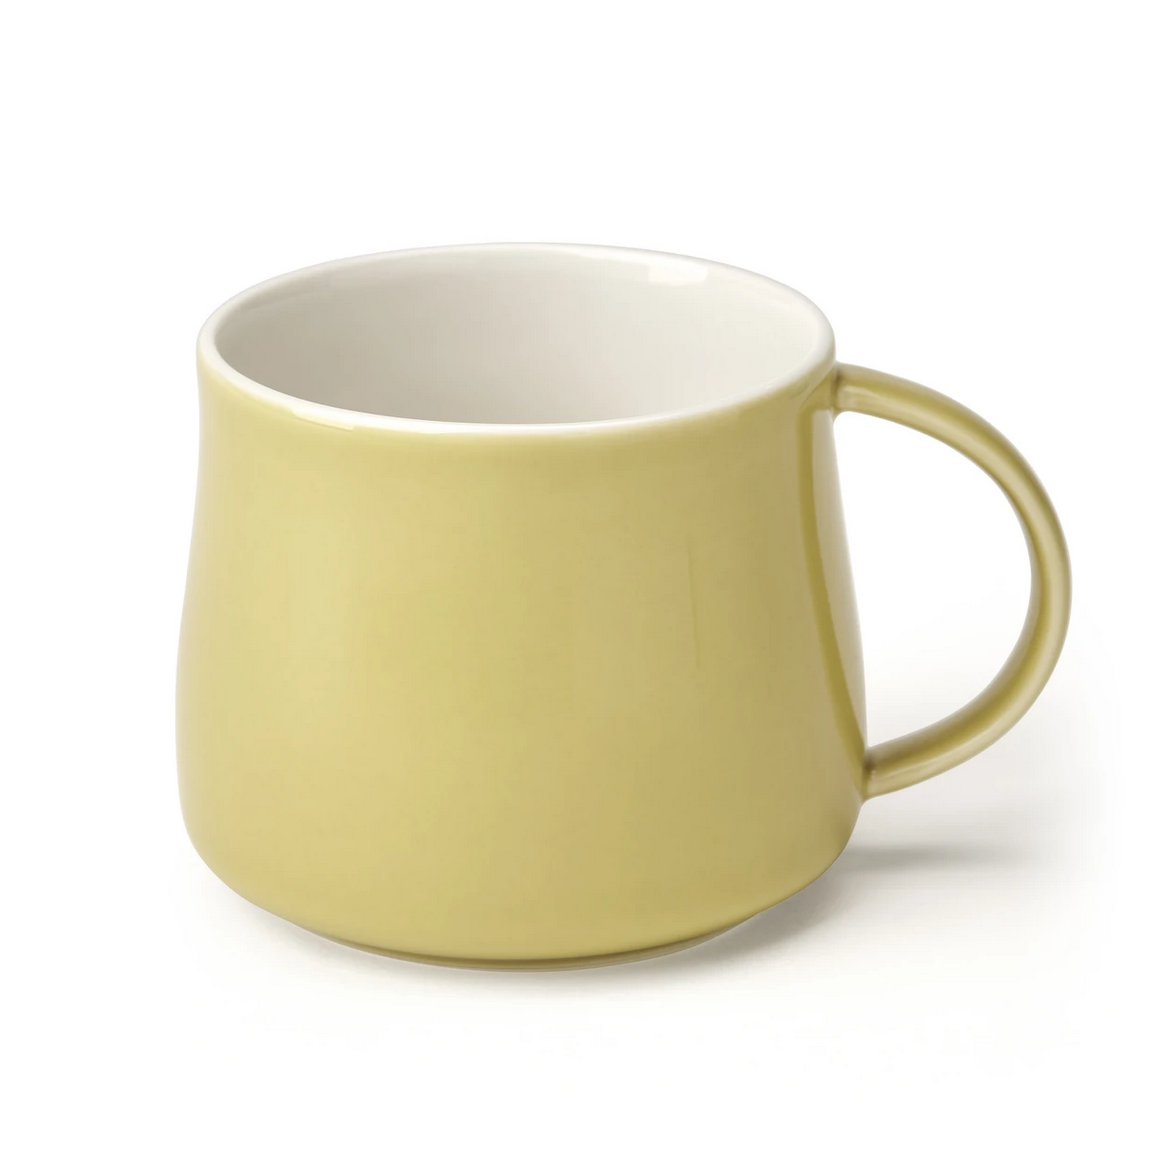 Lemoncello 8oz tea cup